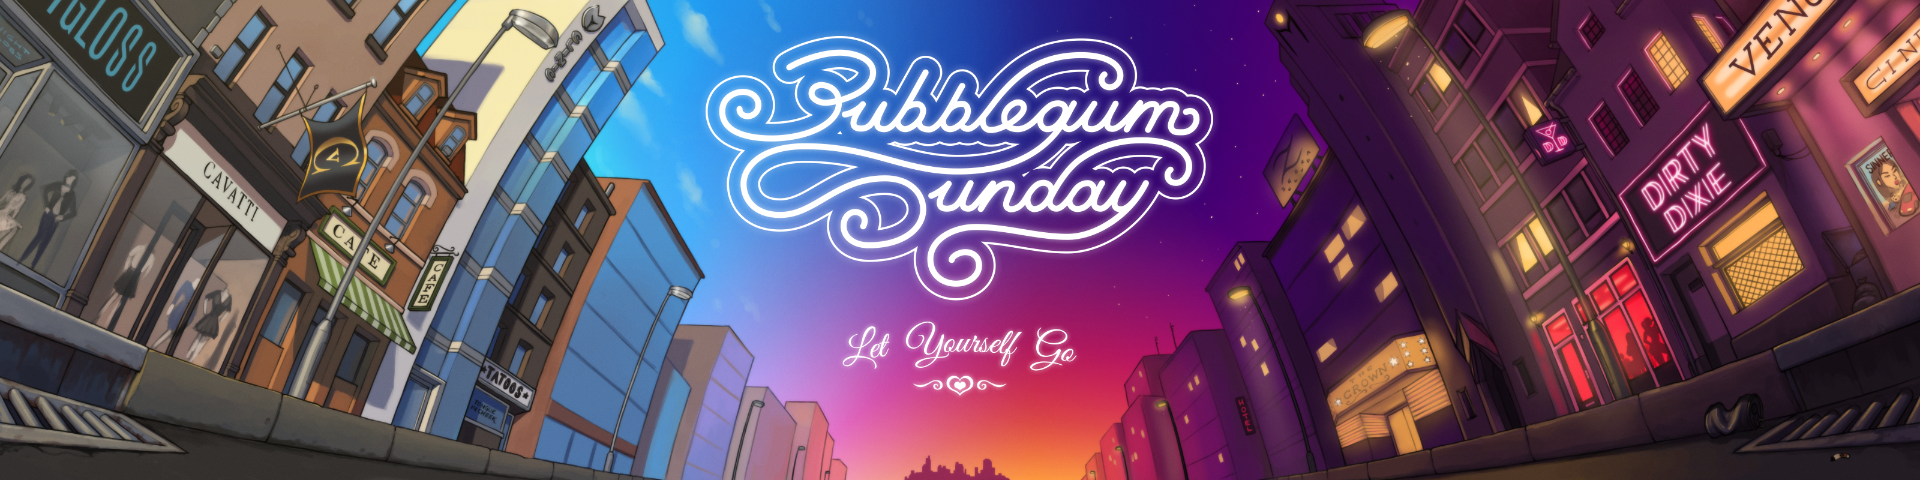 Bubblegum Sunday [Win / Android]